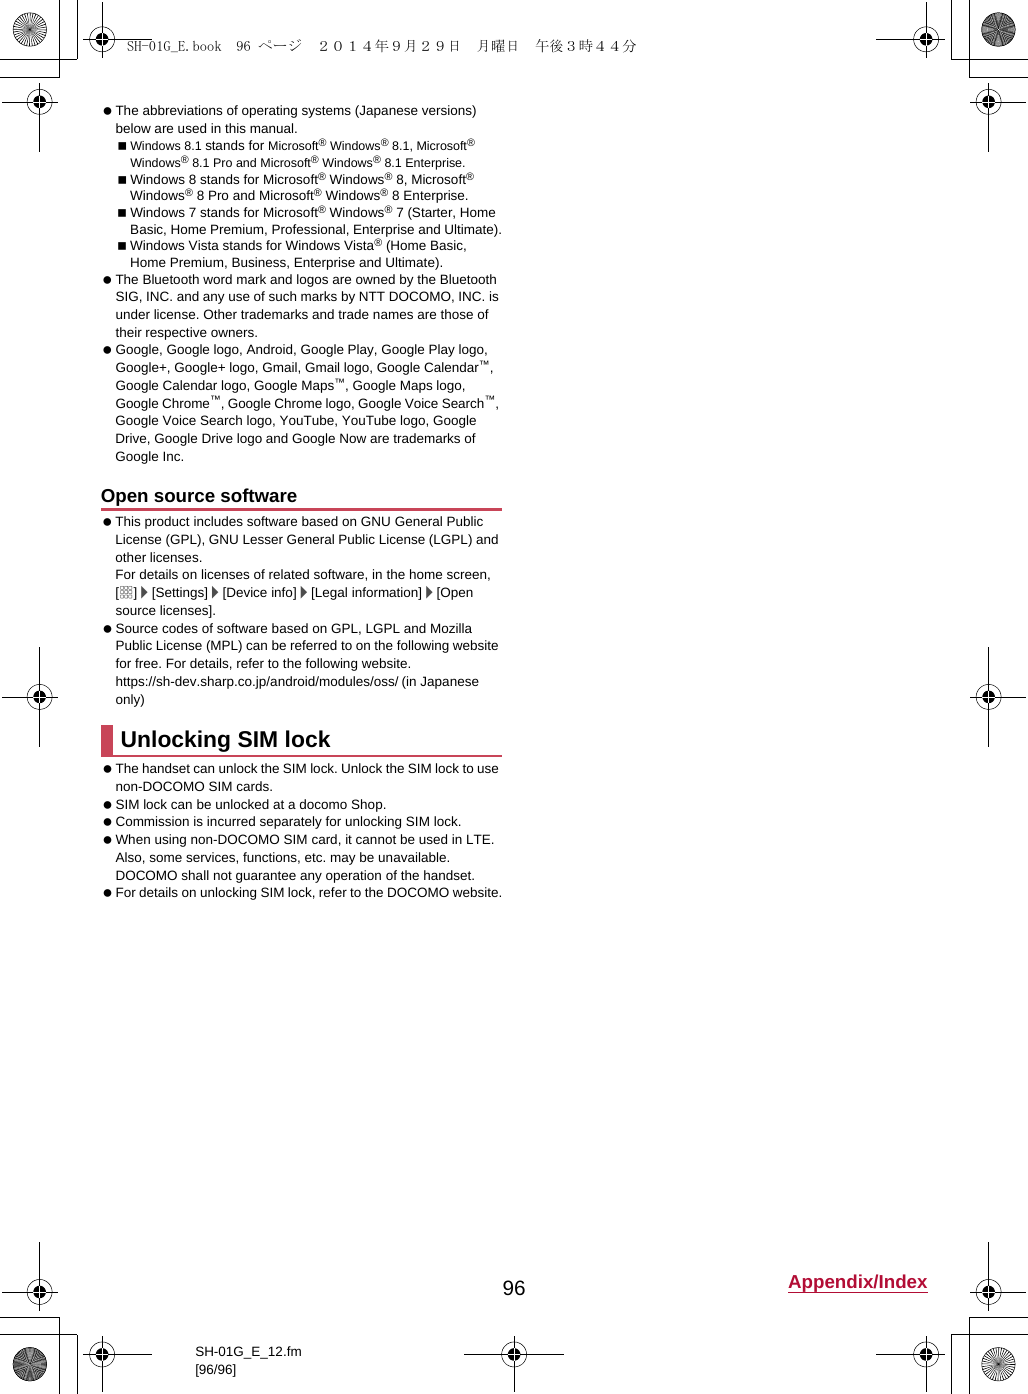 Page 25 of Sharp HRO00212 Smart Phone User Manual